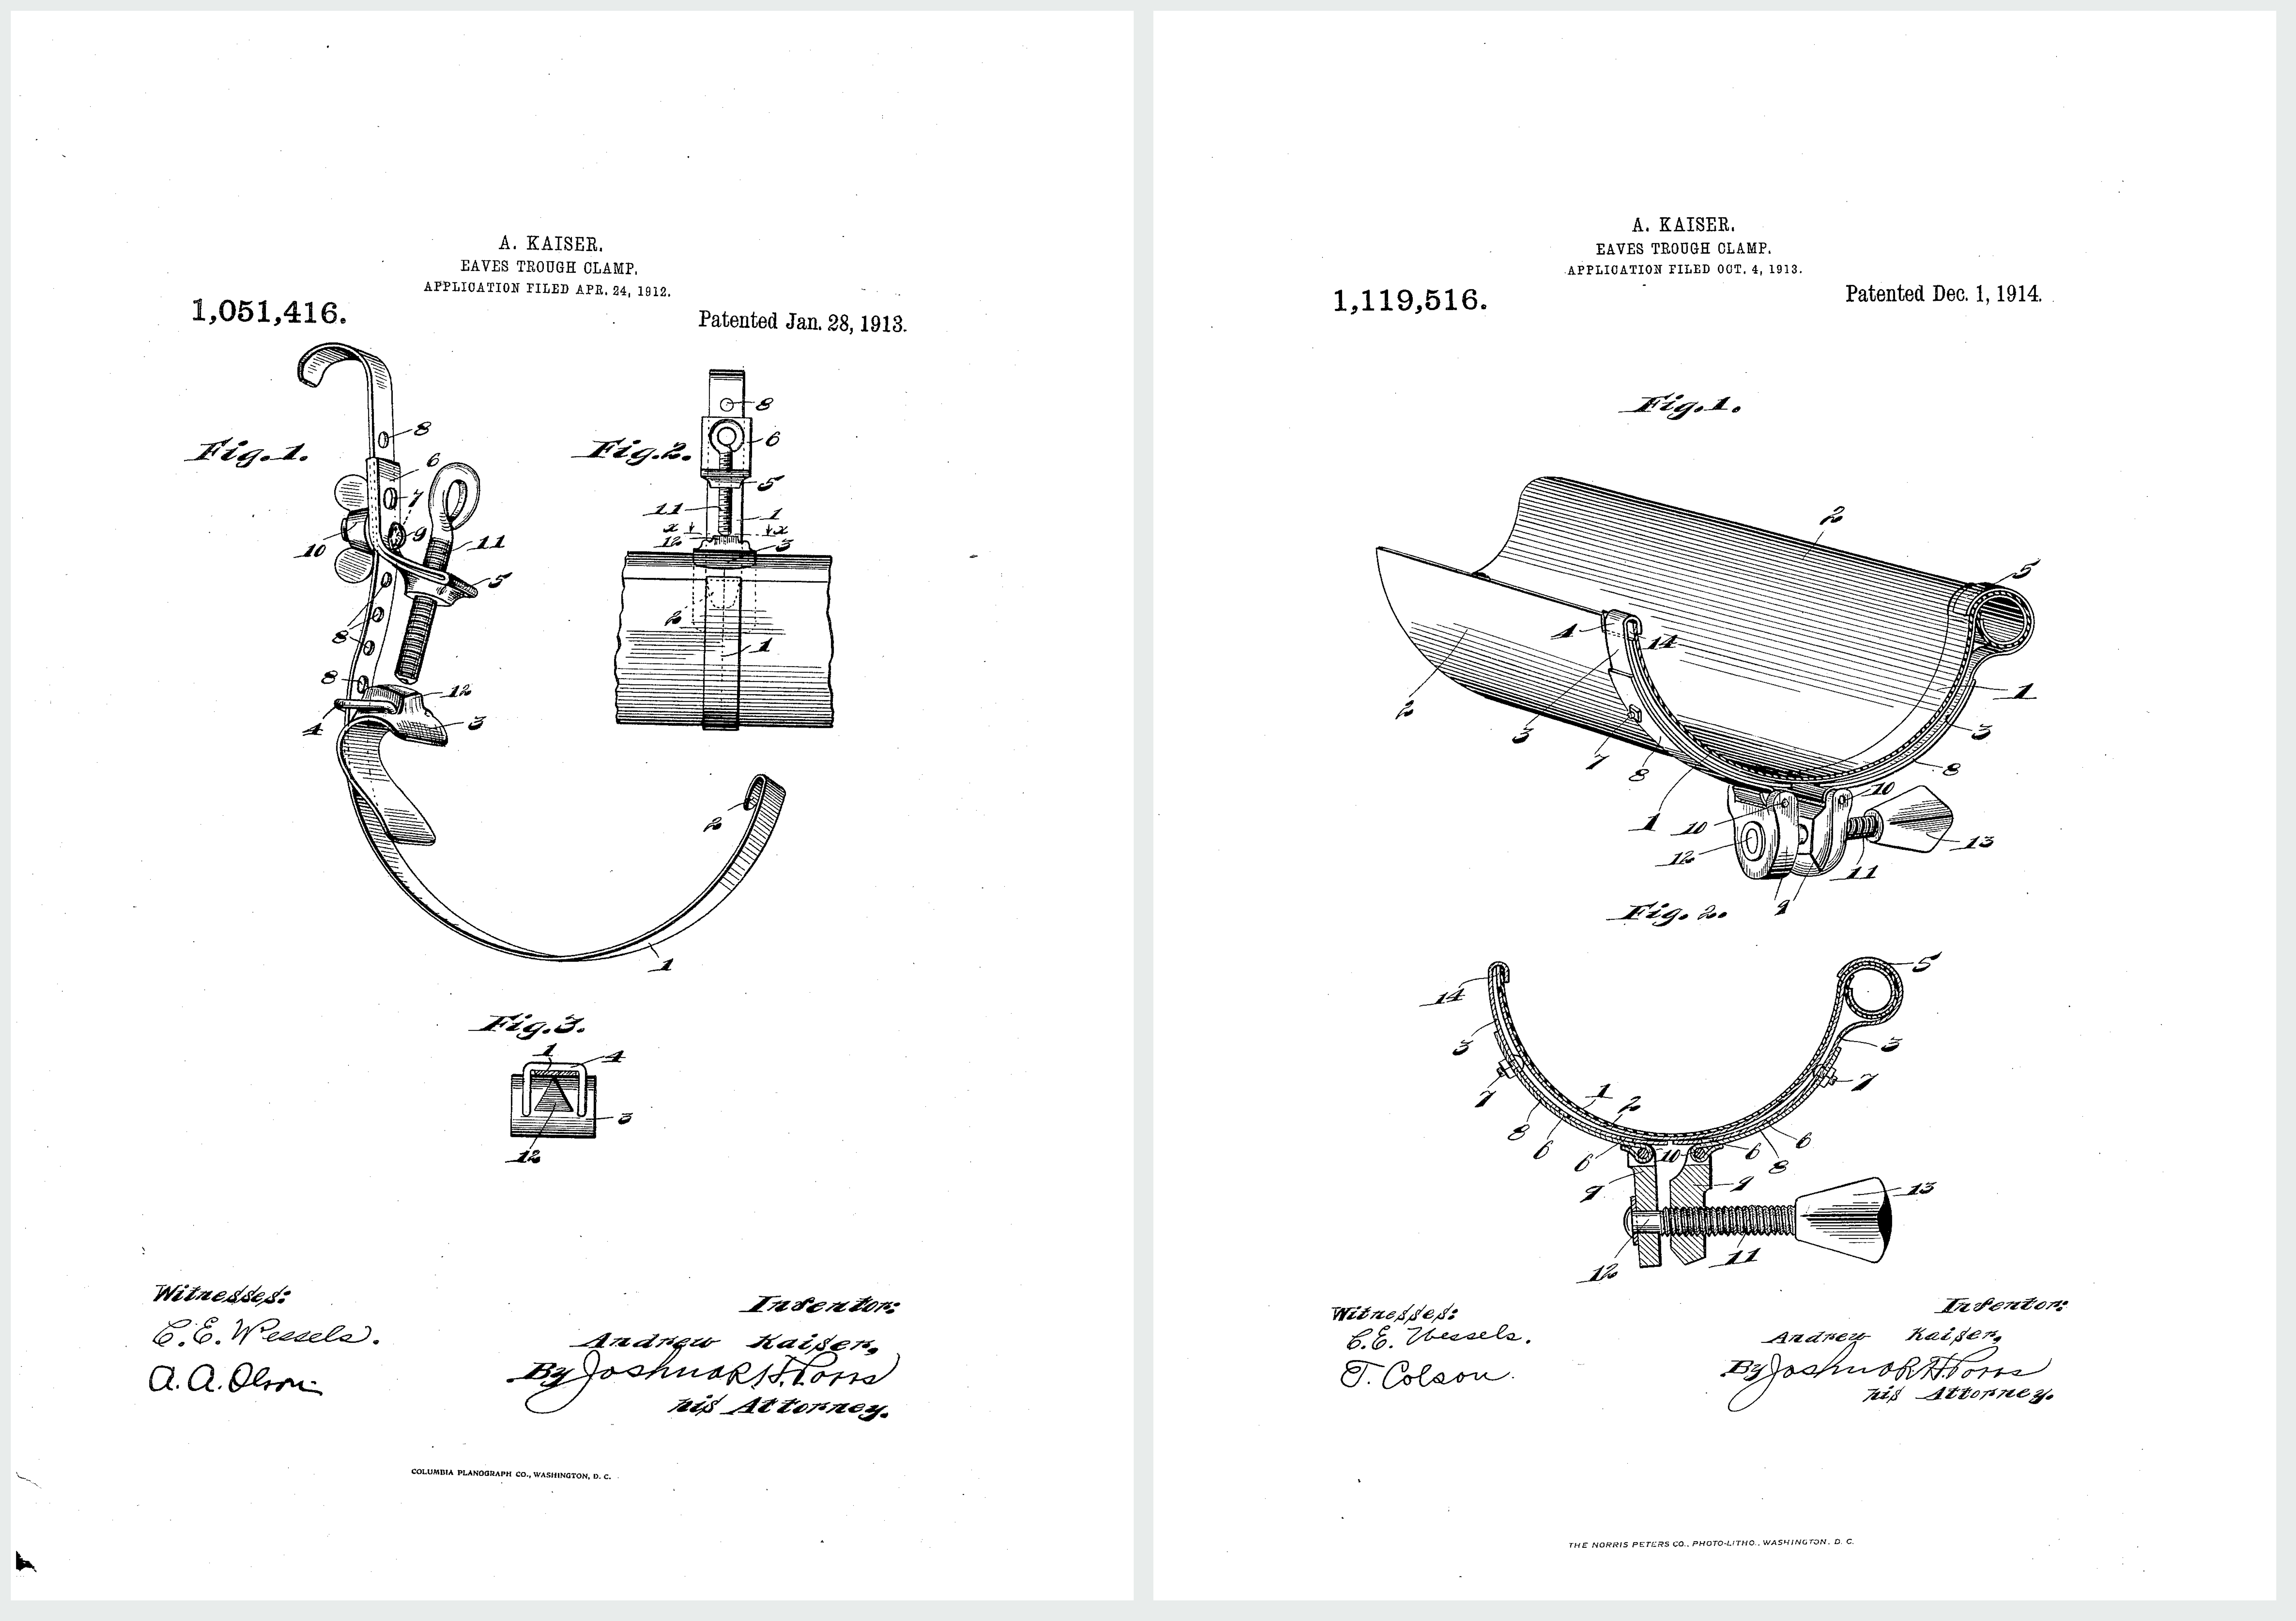 Kaiser_Andrew_1914_Patents_fromEspacenet